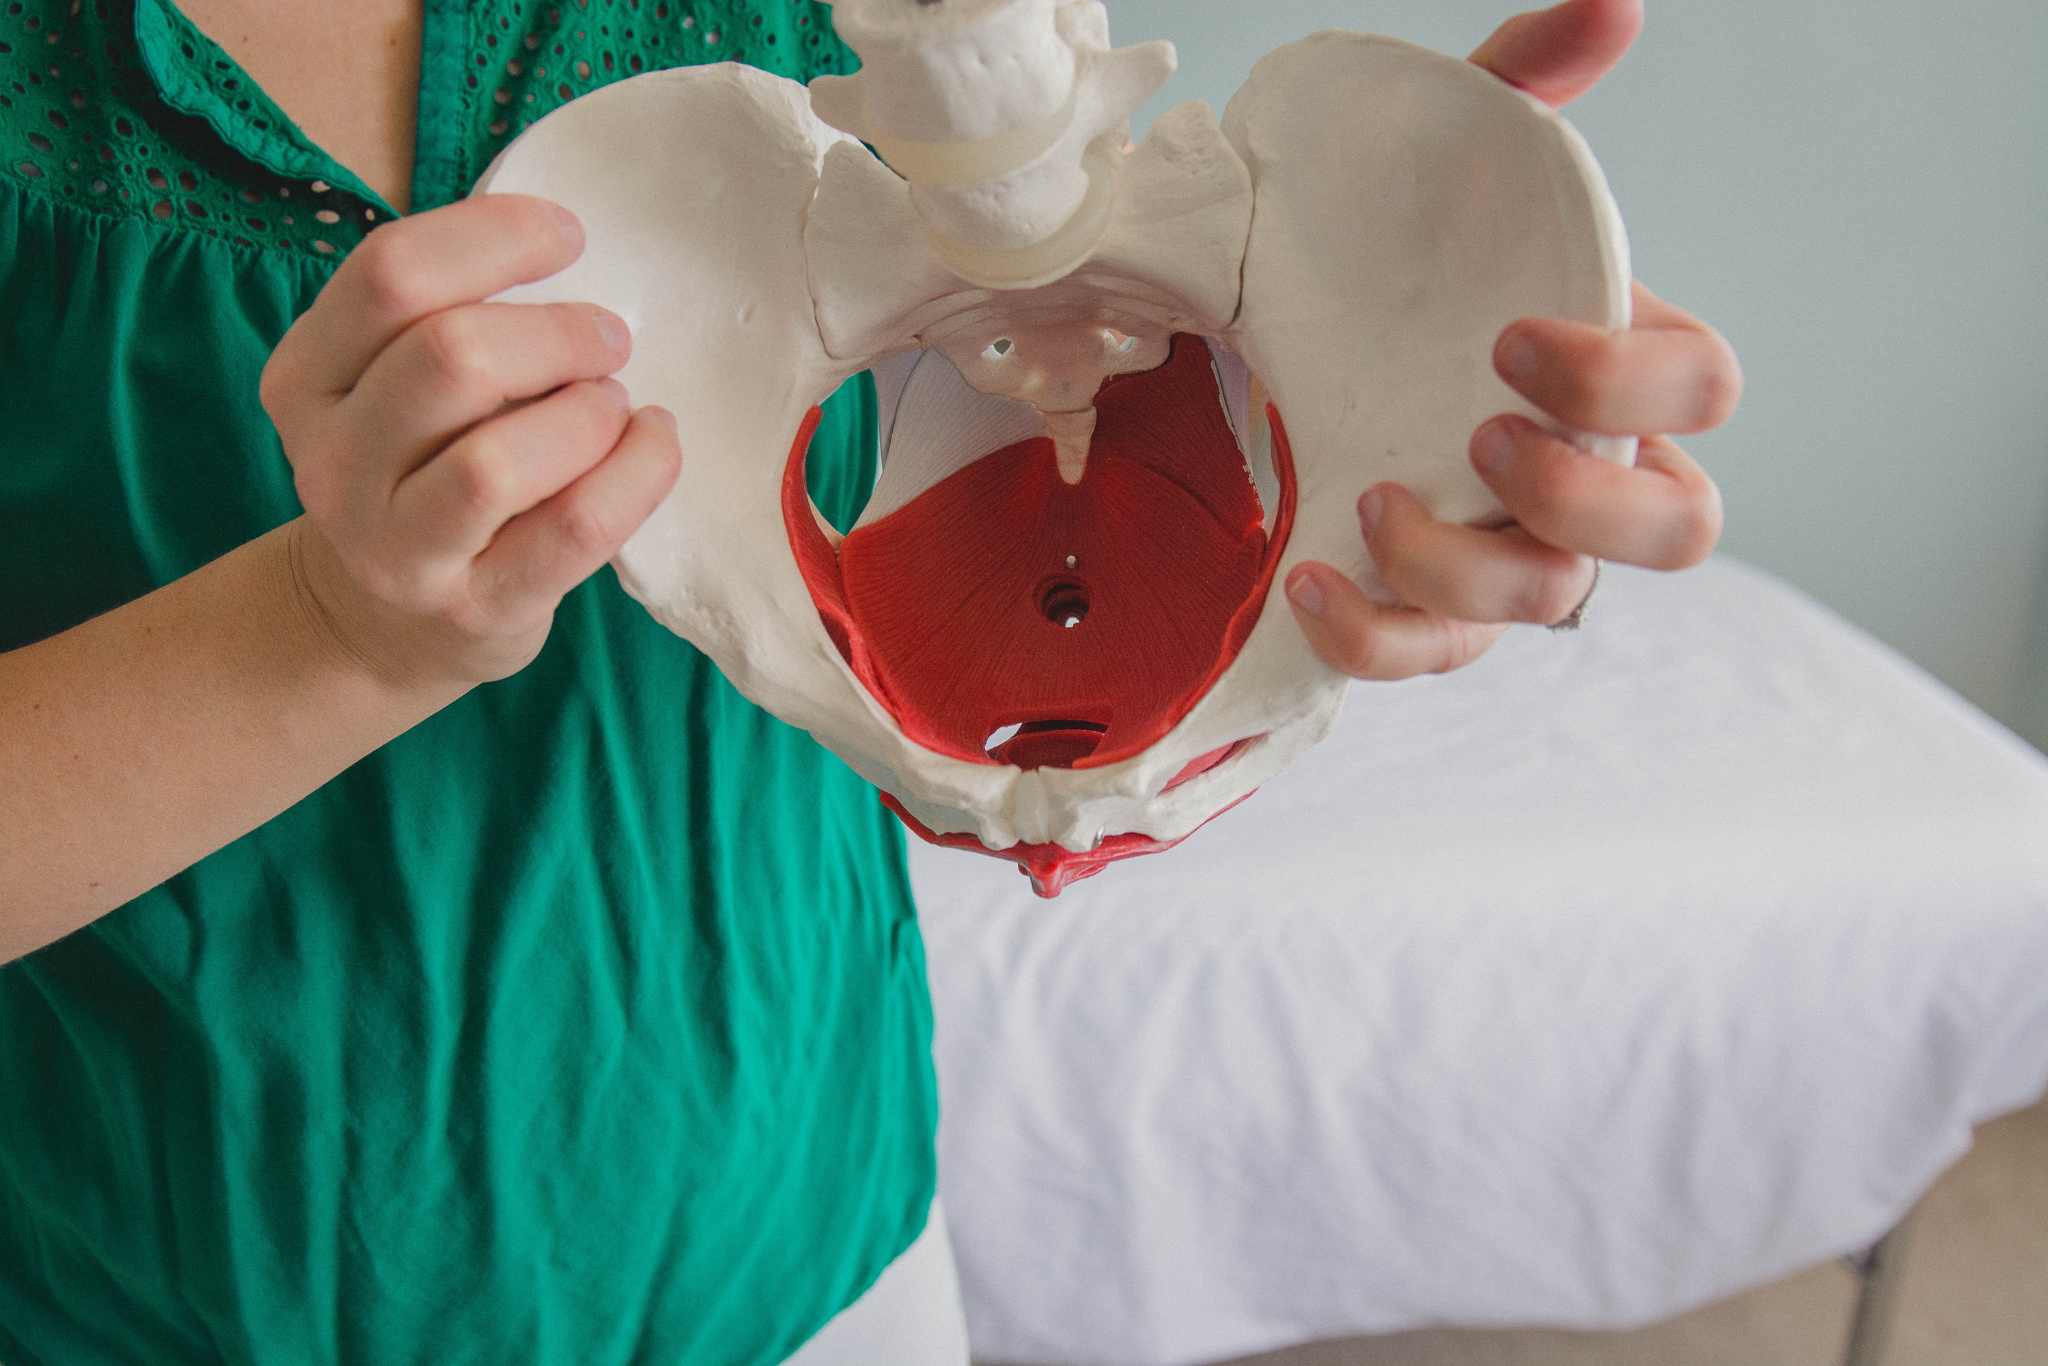 pelvic floor physical therapist displaying a pelvis model highlighting the pelvic floor muscles